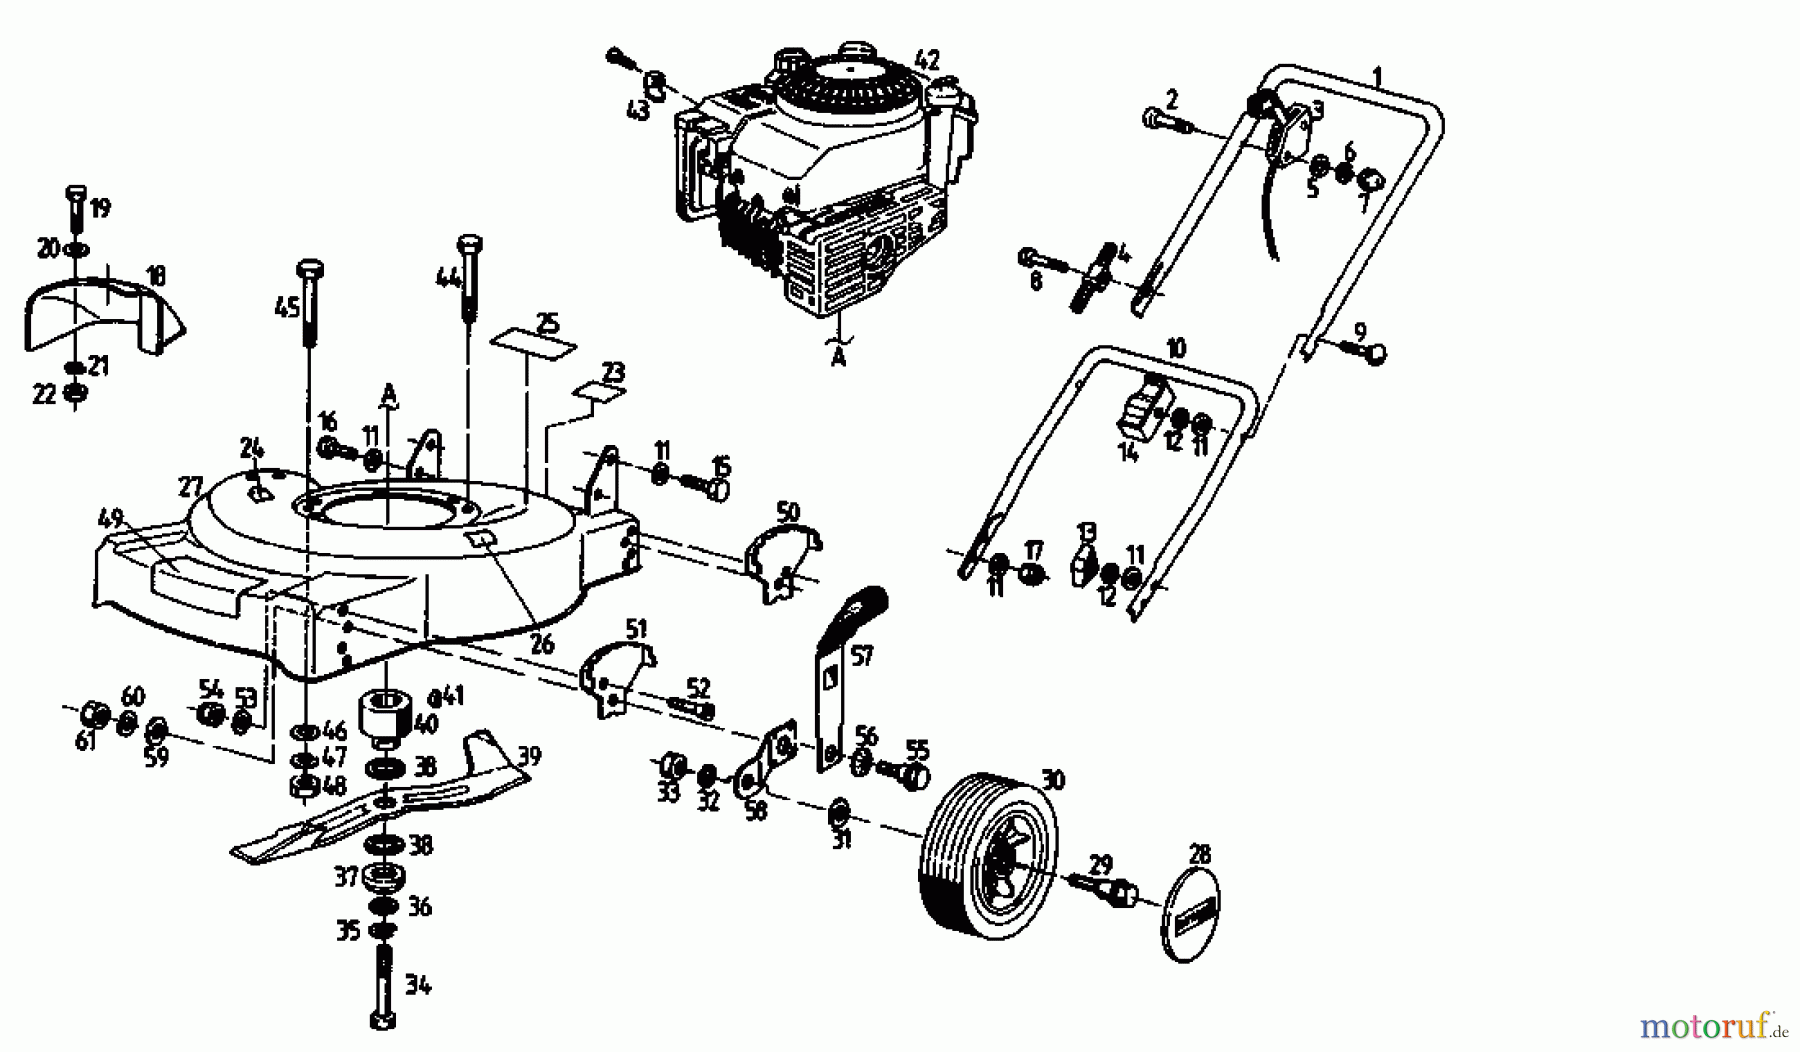  Gutbrod Tondeuse thermique TURBO SBS-48 02670.03  (1993) Machine de base